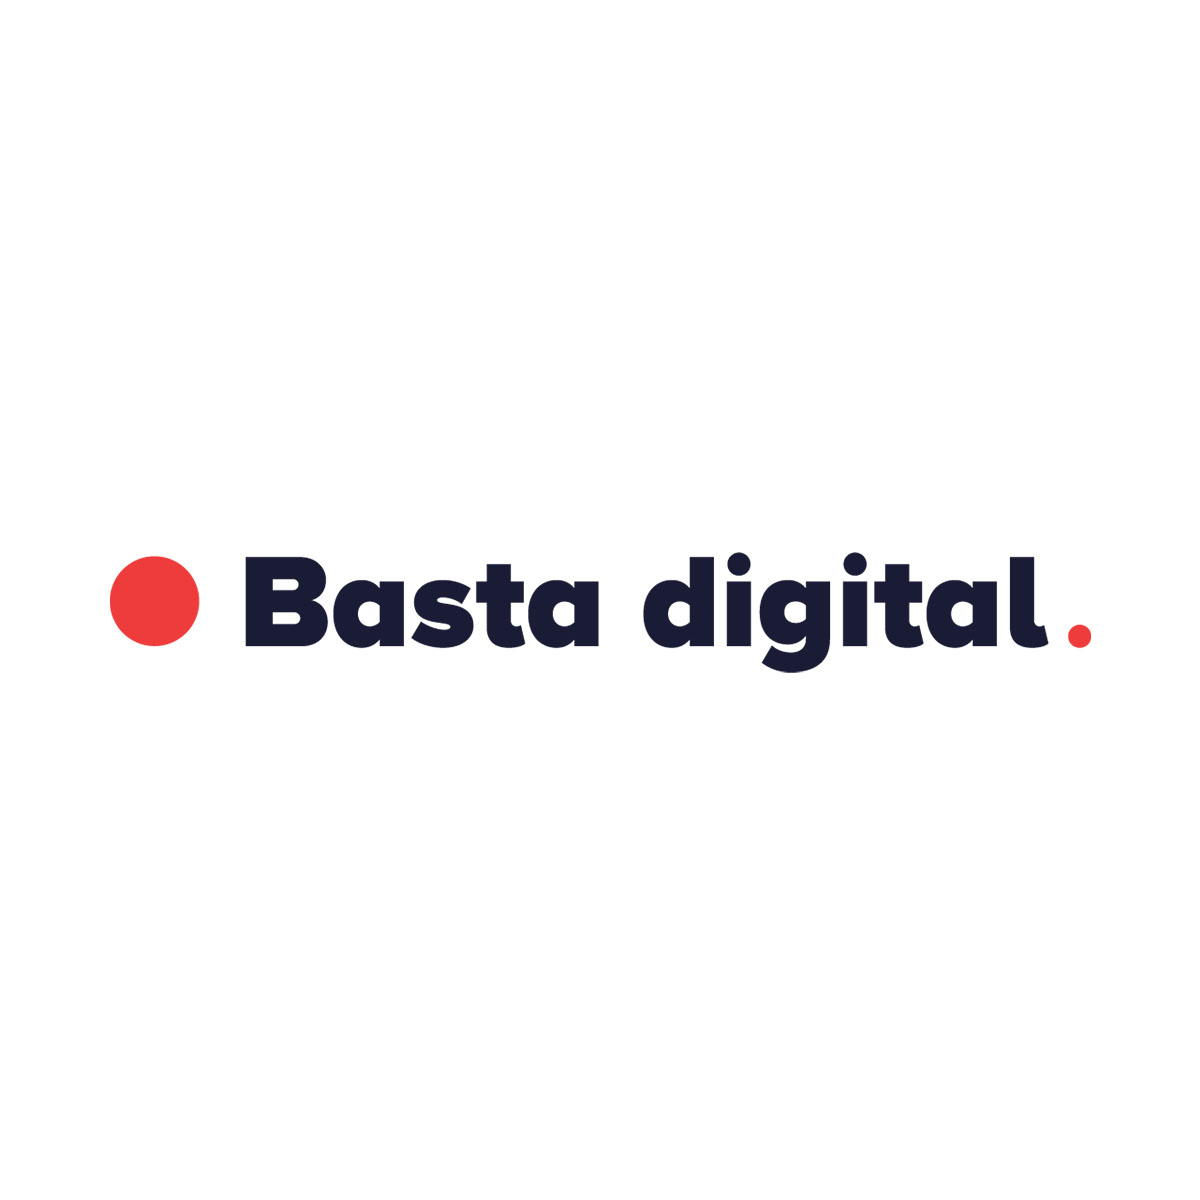 Managing Director Basta digital